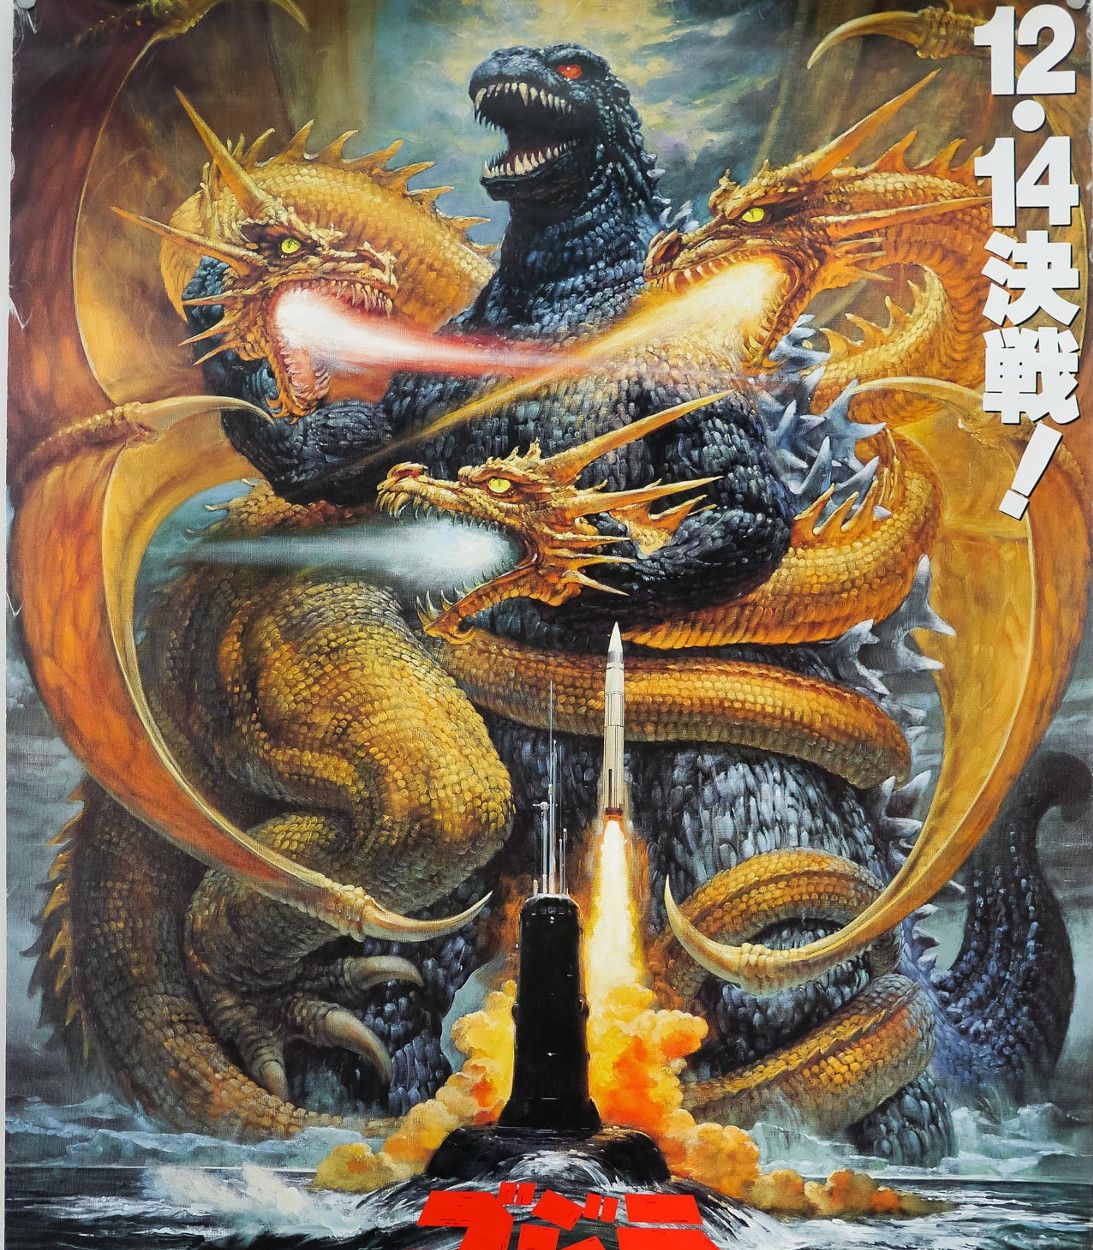 Godzilla Vs King Ghidorah Movie Poster